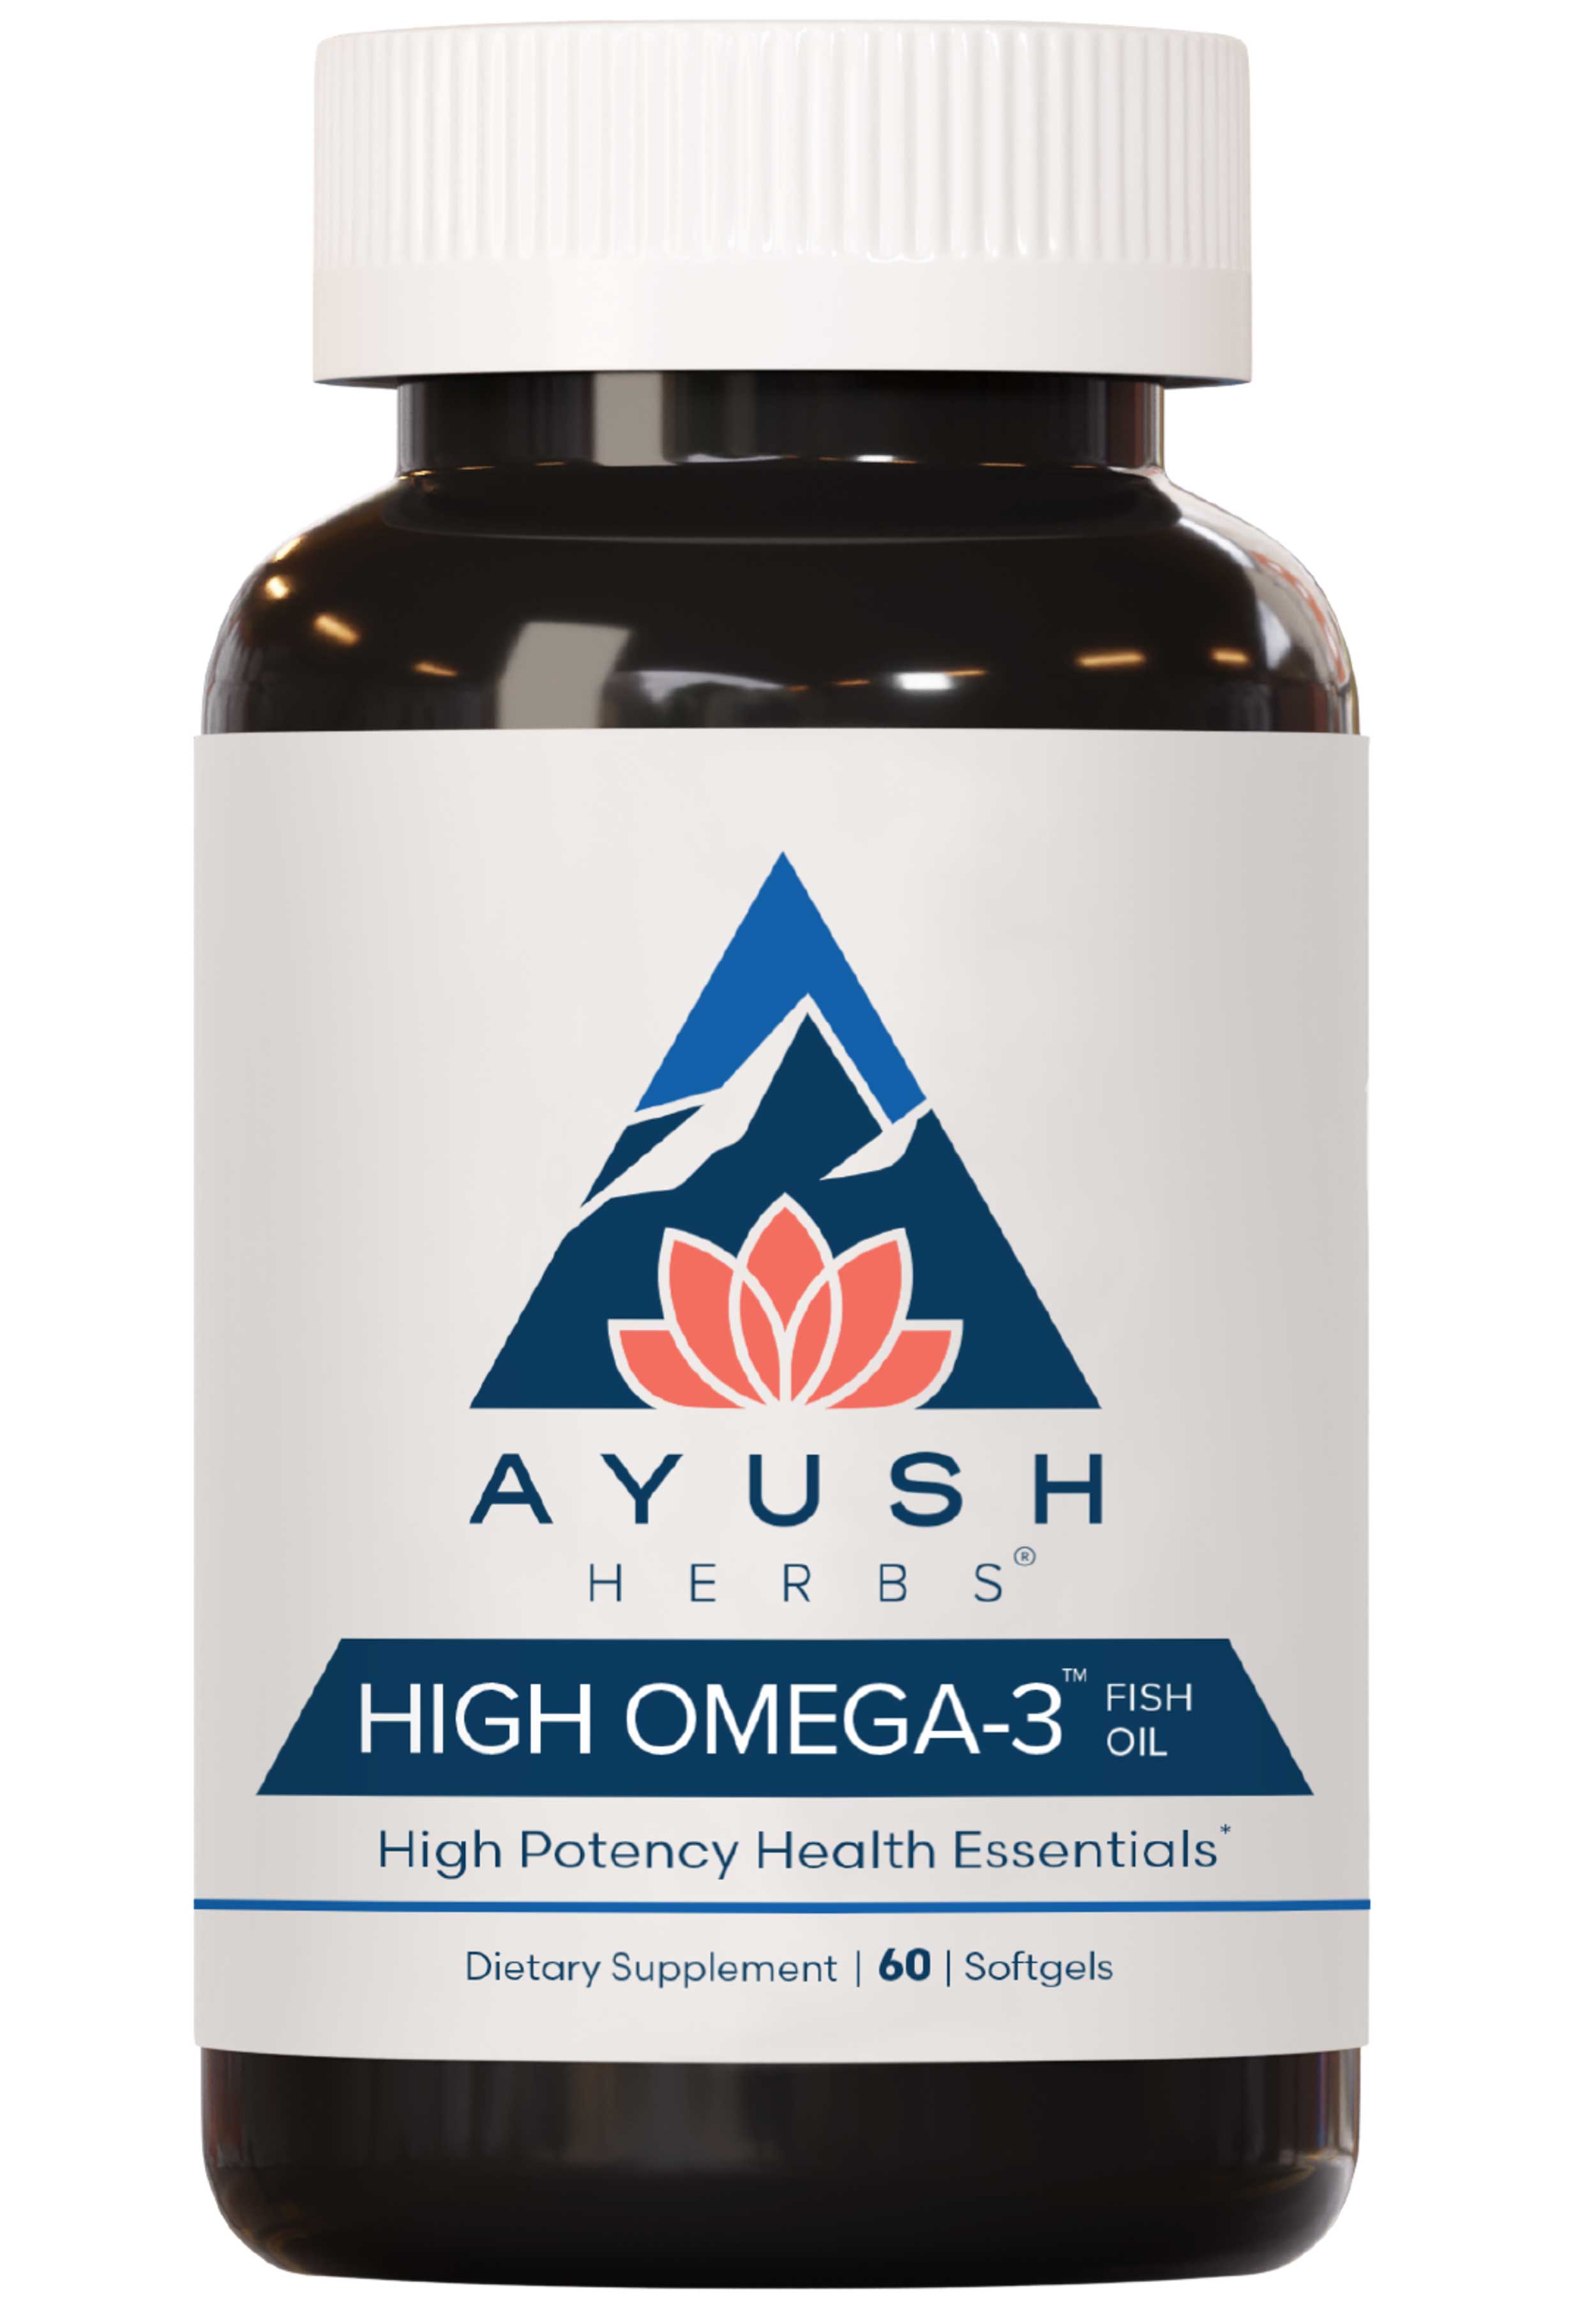 Ayush Herbs High Omega-3 Fish Oil (Formerly High Omega-3 Alaskan Fish Oil)